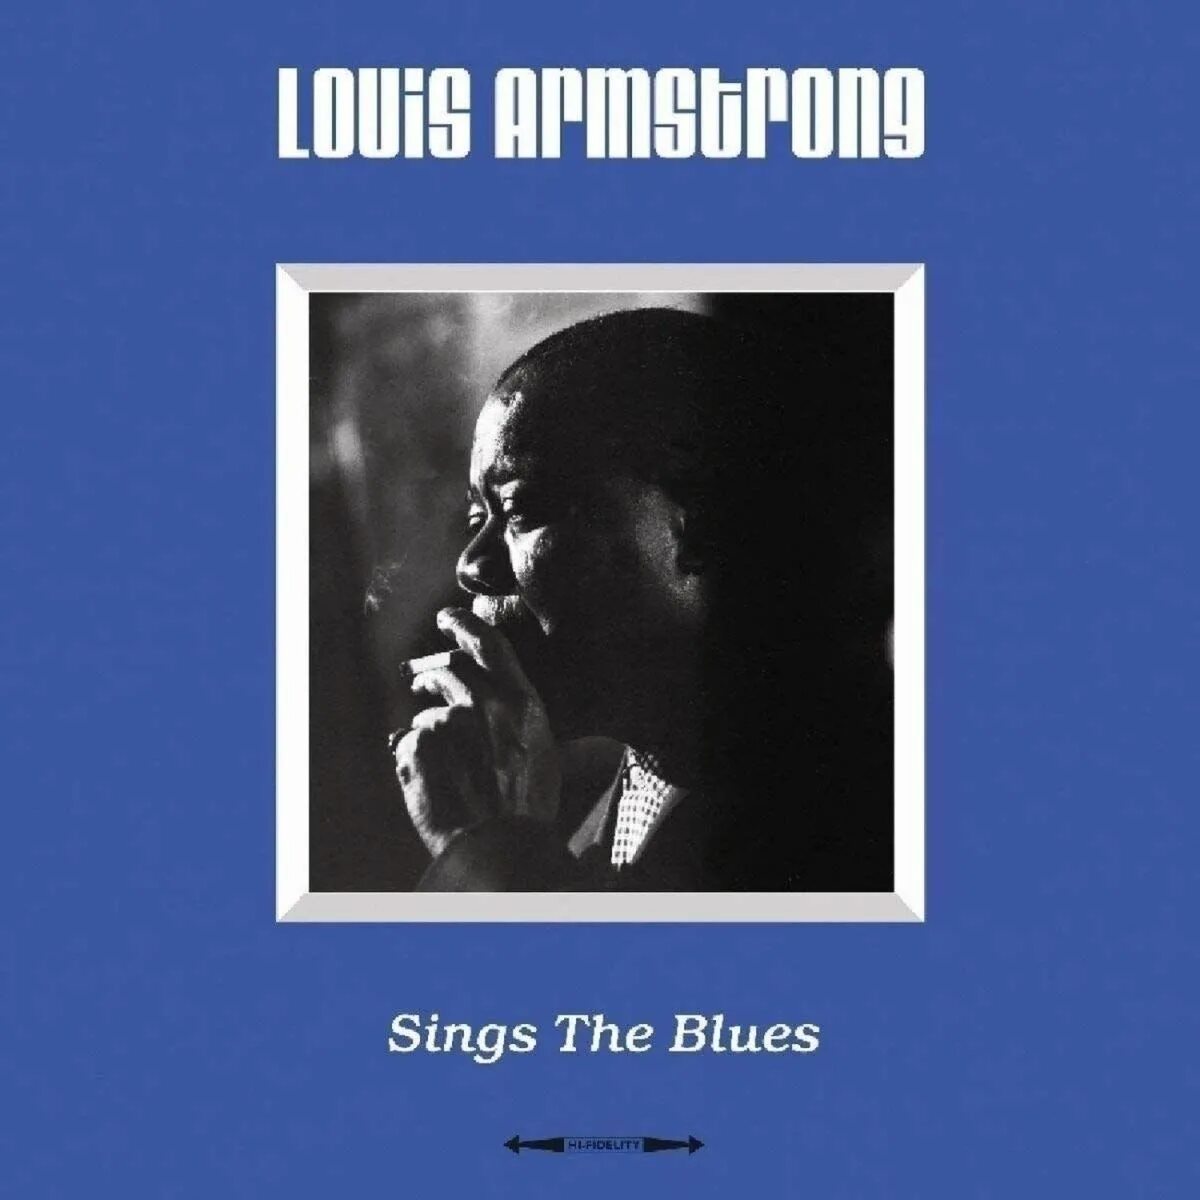 Sings the blues. Луи Армстронг. Louis Armstrong singing. Луи Армстронг пластинка. Джаз, блюз и соул.